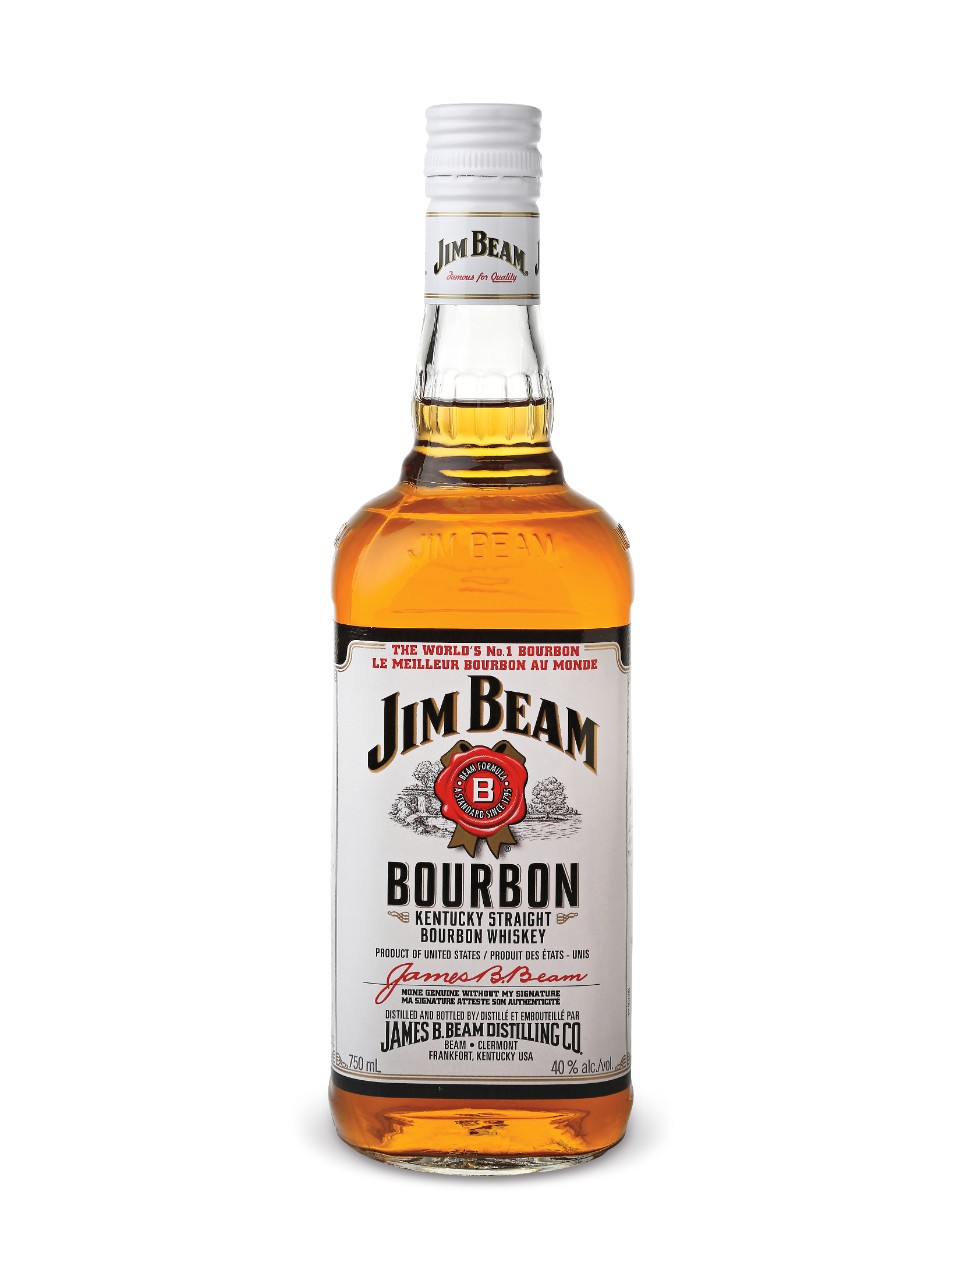 Jim Beam - Bourbon Whiskey 0,7 l